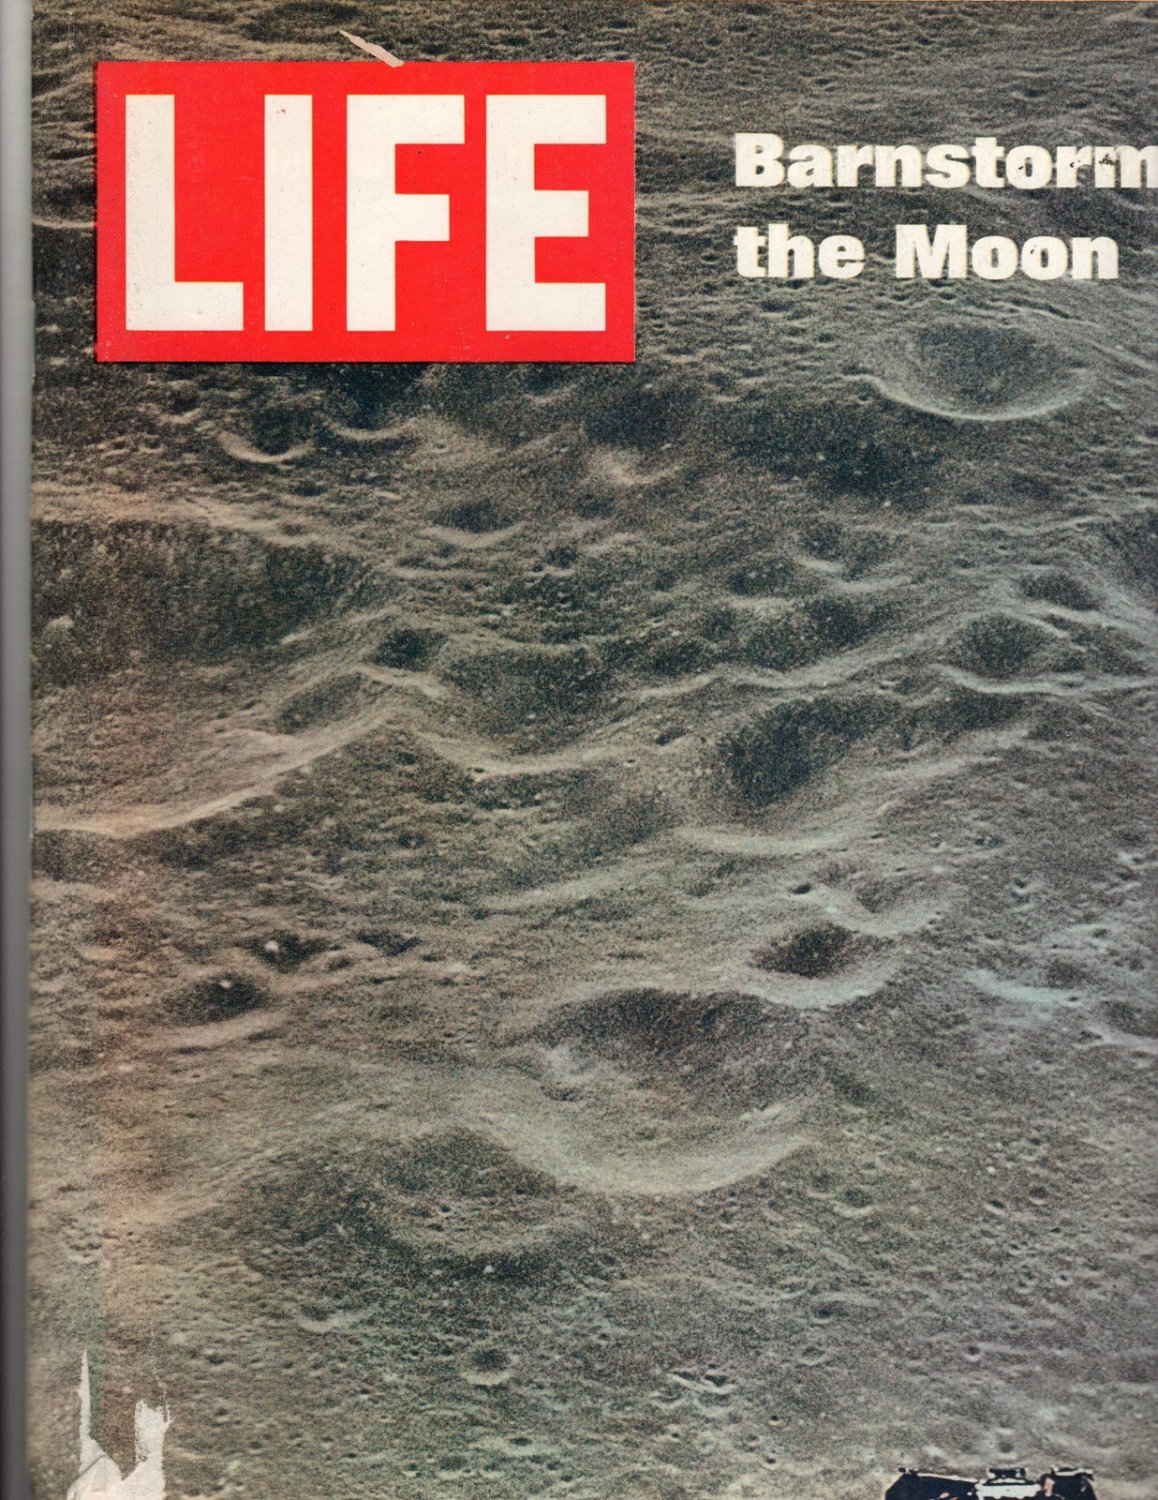 Life Magazine (June 6,1969)